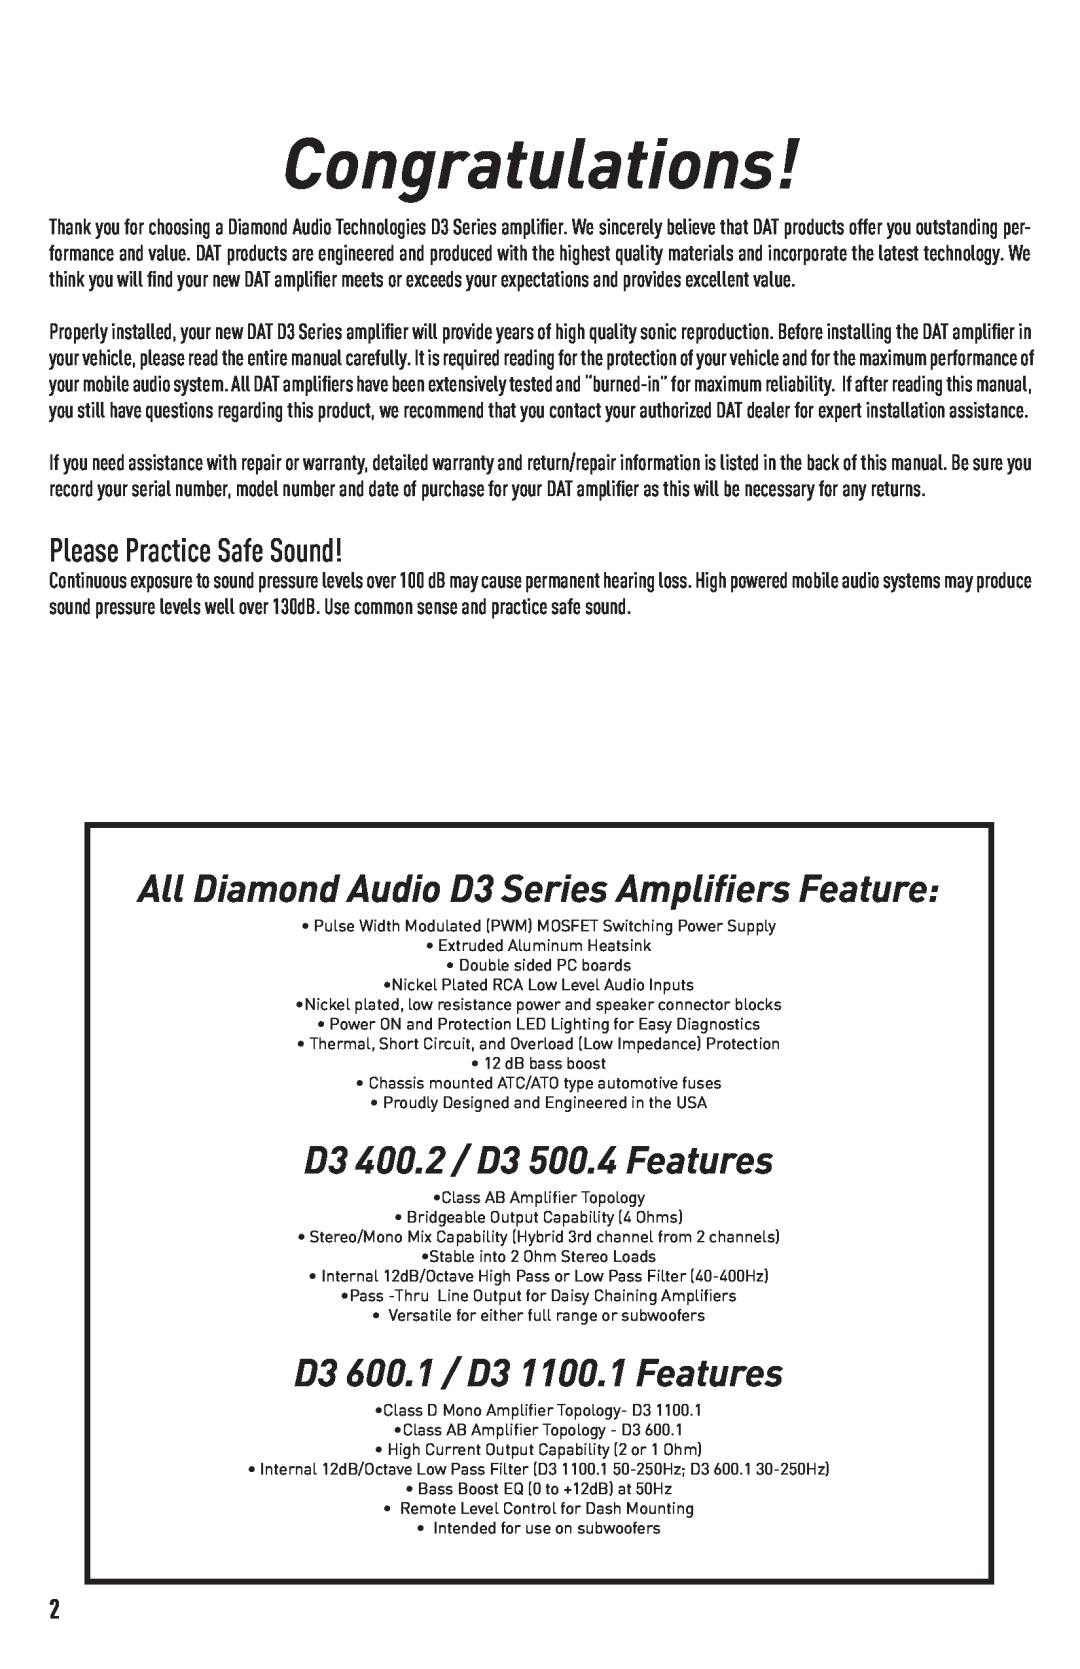 Diamond D3 1100.1, D3 600.1 Congratulations, All Diamond Audio D3 Series Ampliﬁers Feature, D3 400.2 / D3 500.4 Features 